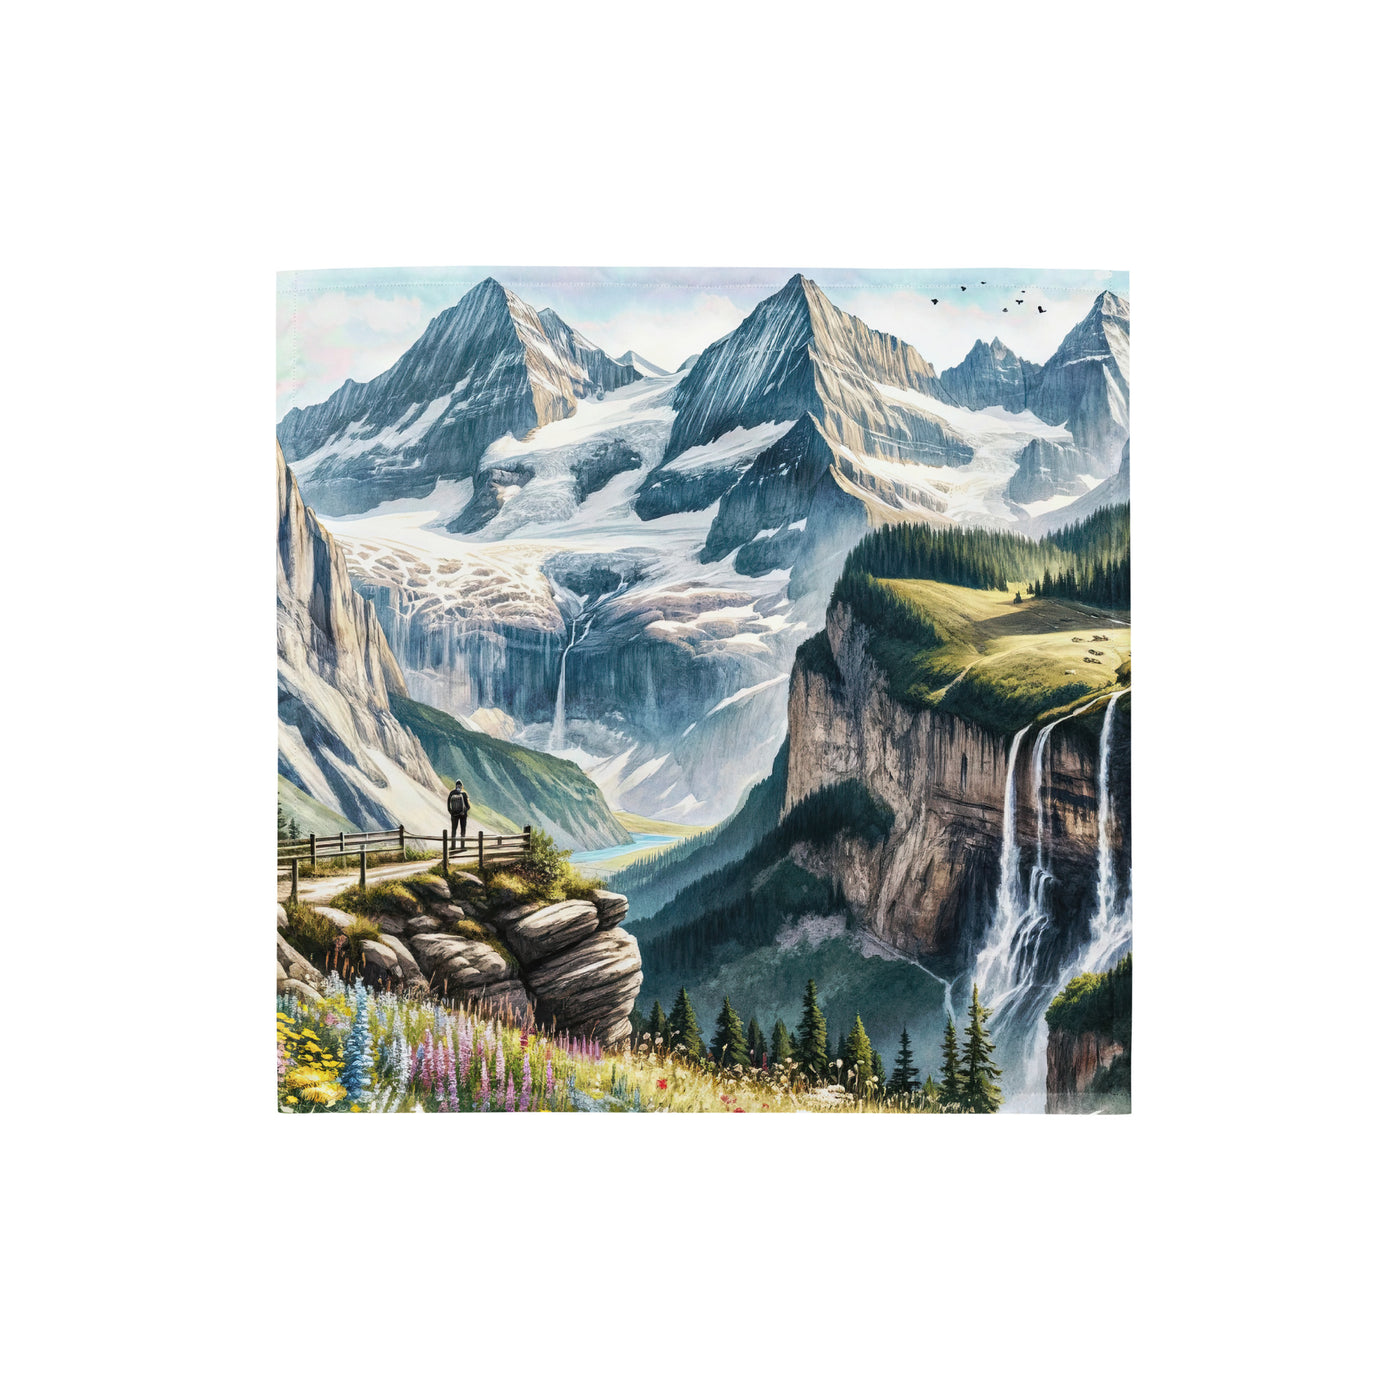 Aquarell-Panoramablick der Alpen mit schneebedeckten Gipfeln, Wasserfällen und Wanderern - Bandana (All-Over Print) wandern xxx yyy zzz S